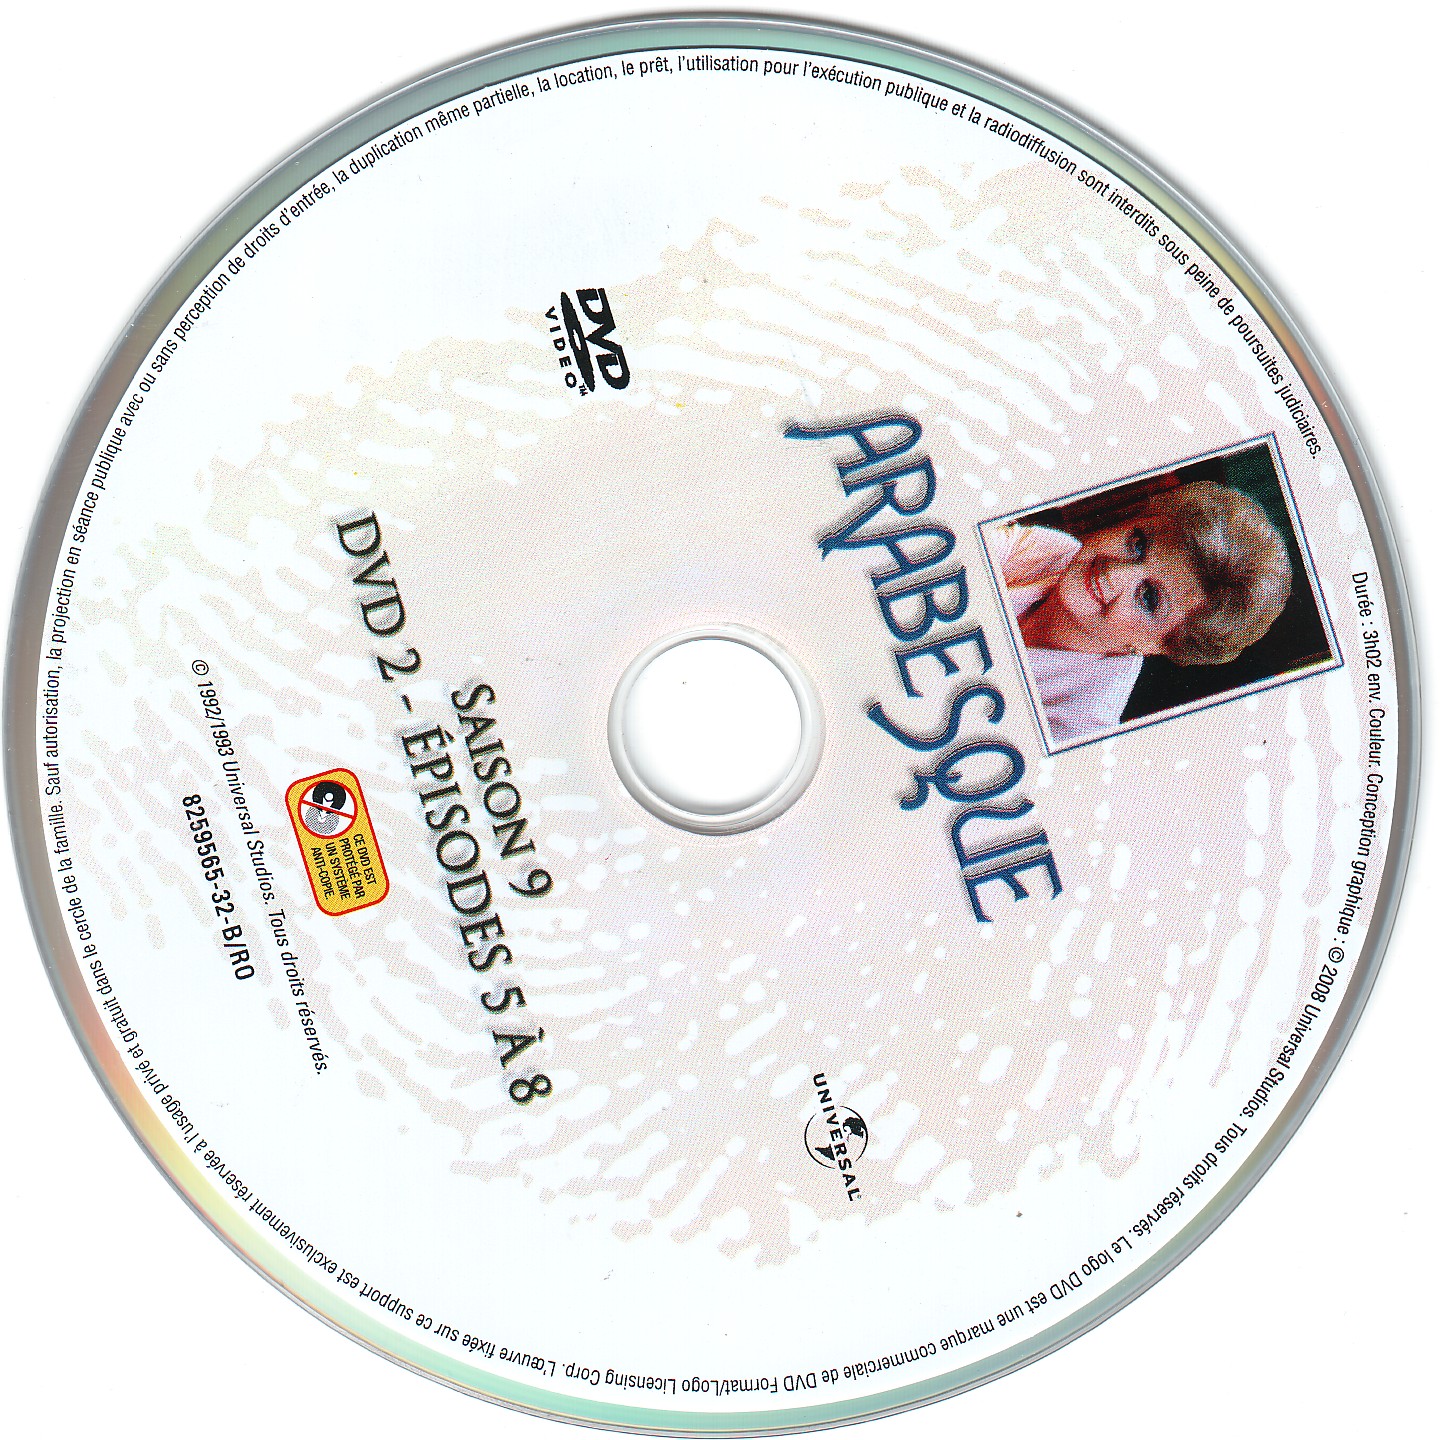 Arabesque saison 9 DISC 2